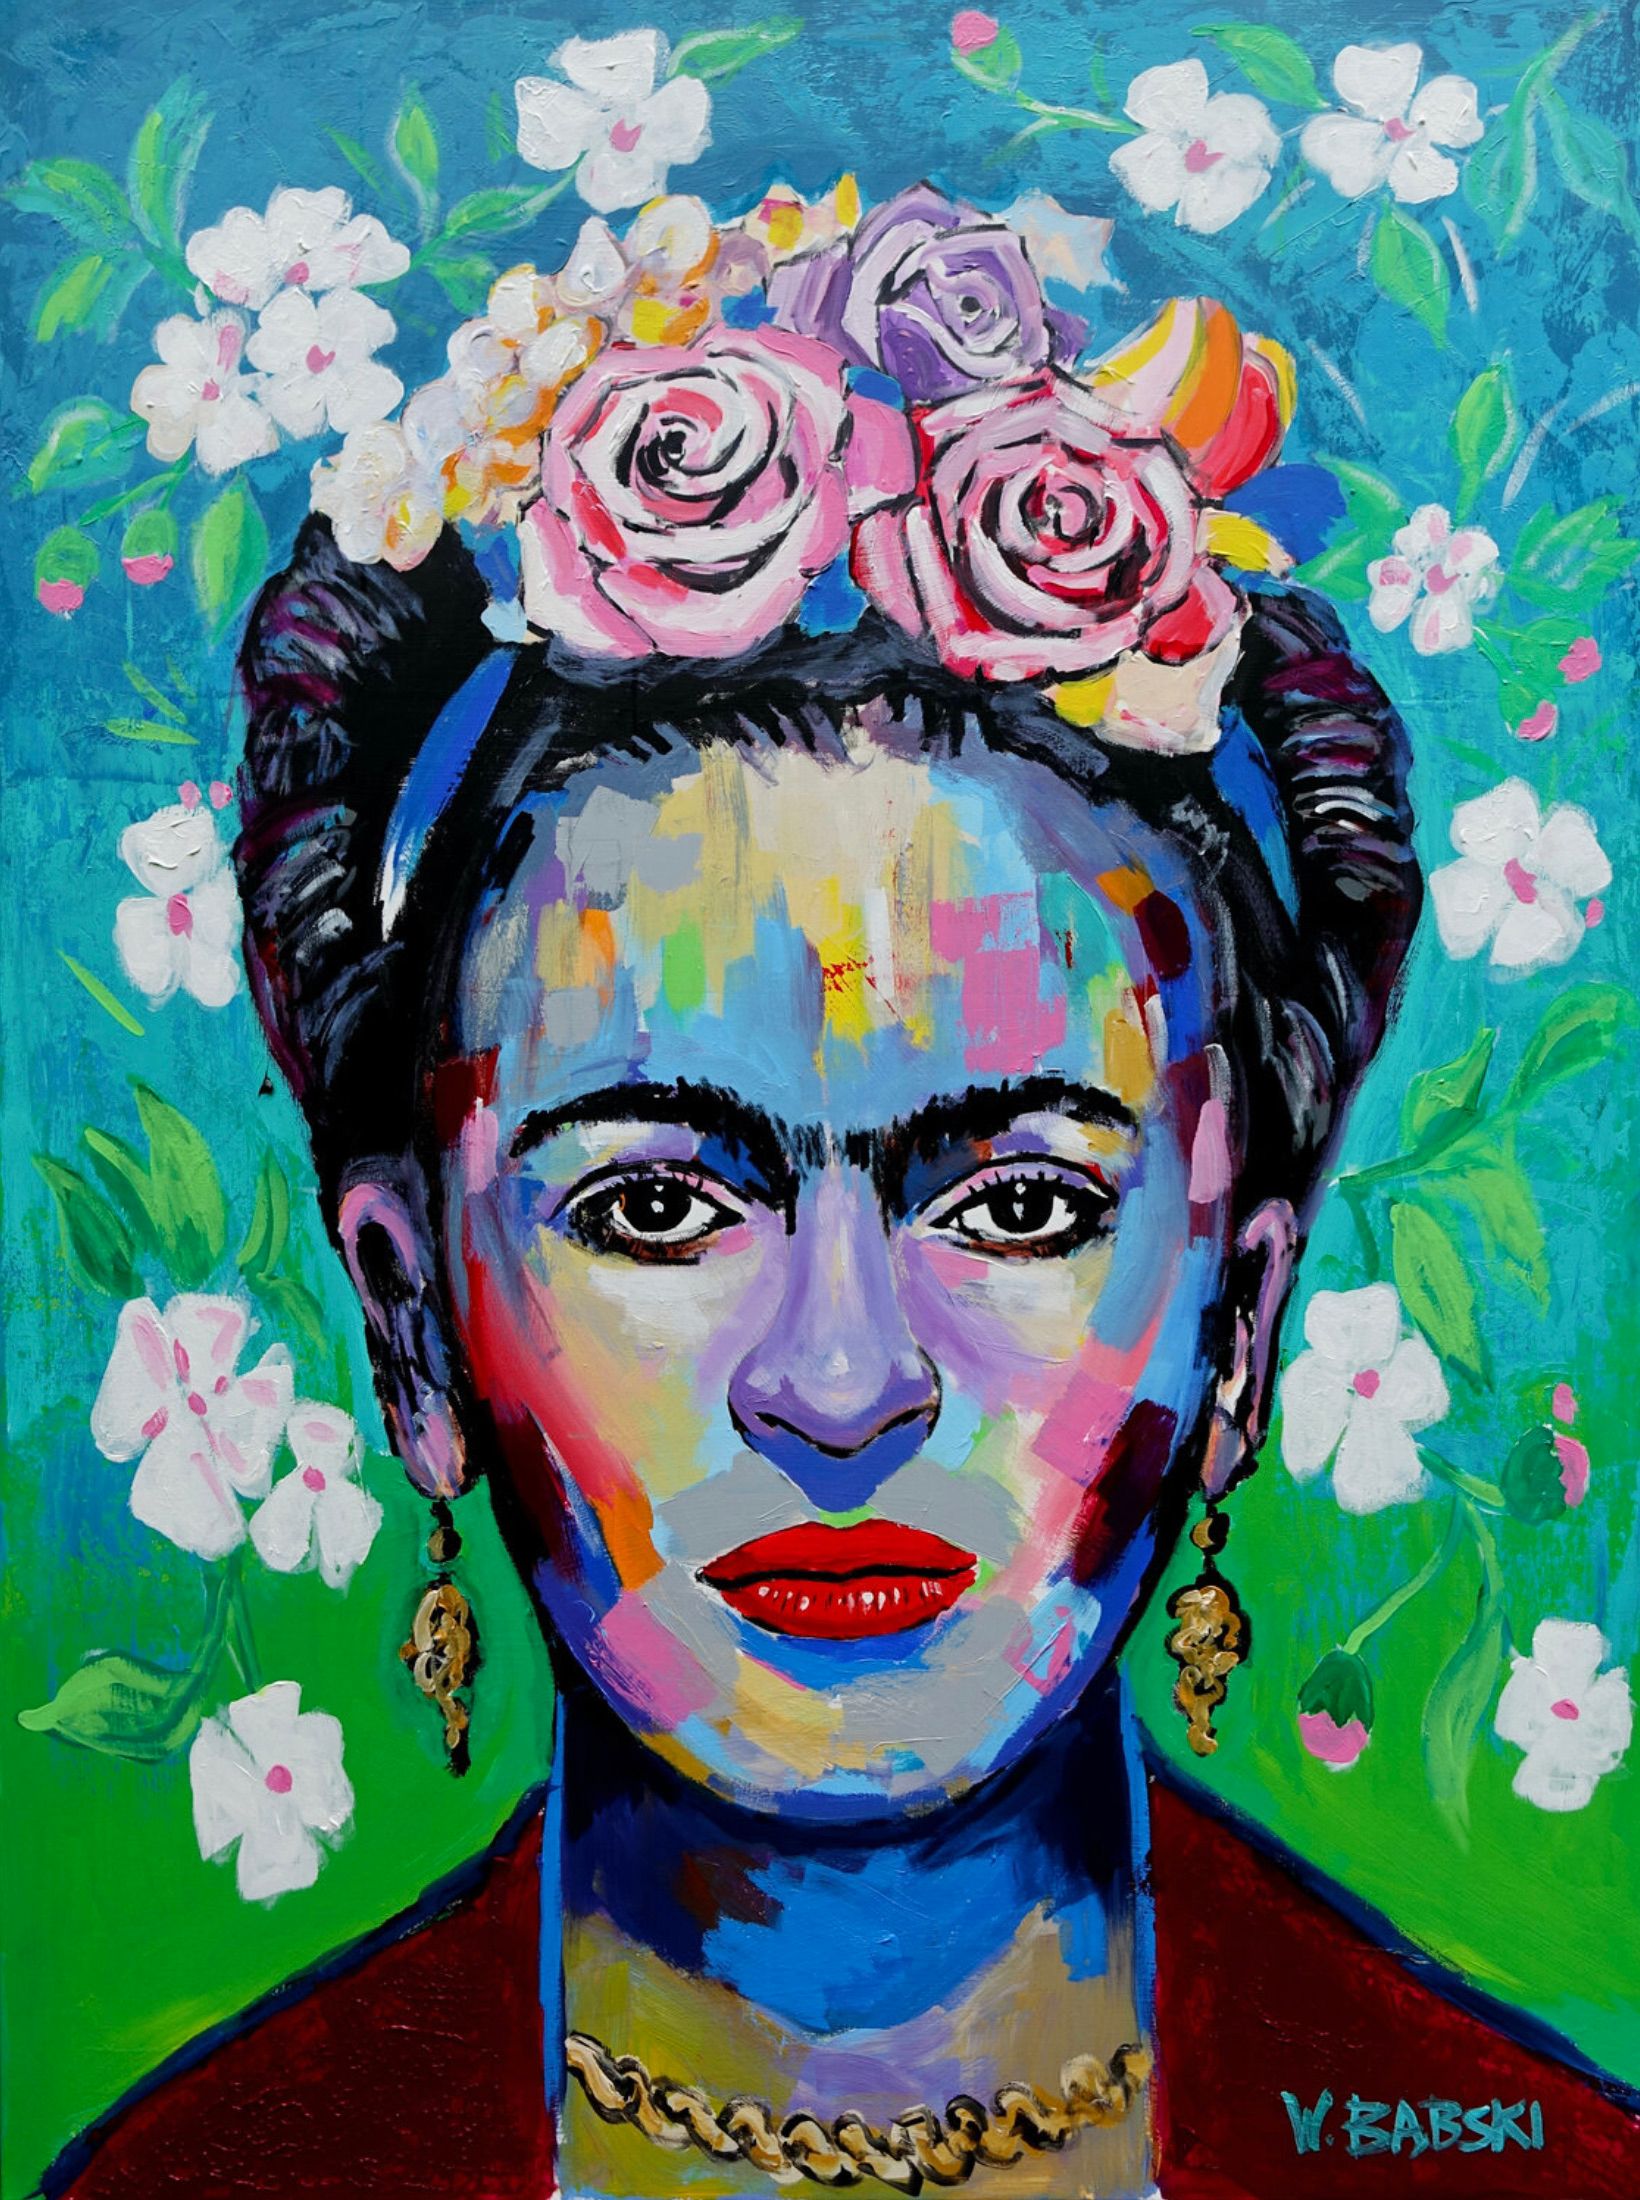 Wojtek Babski Frida 2, ritratto colorato della pittrice Frida Kahlo